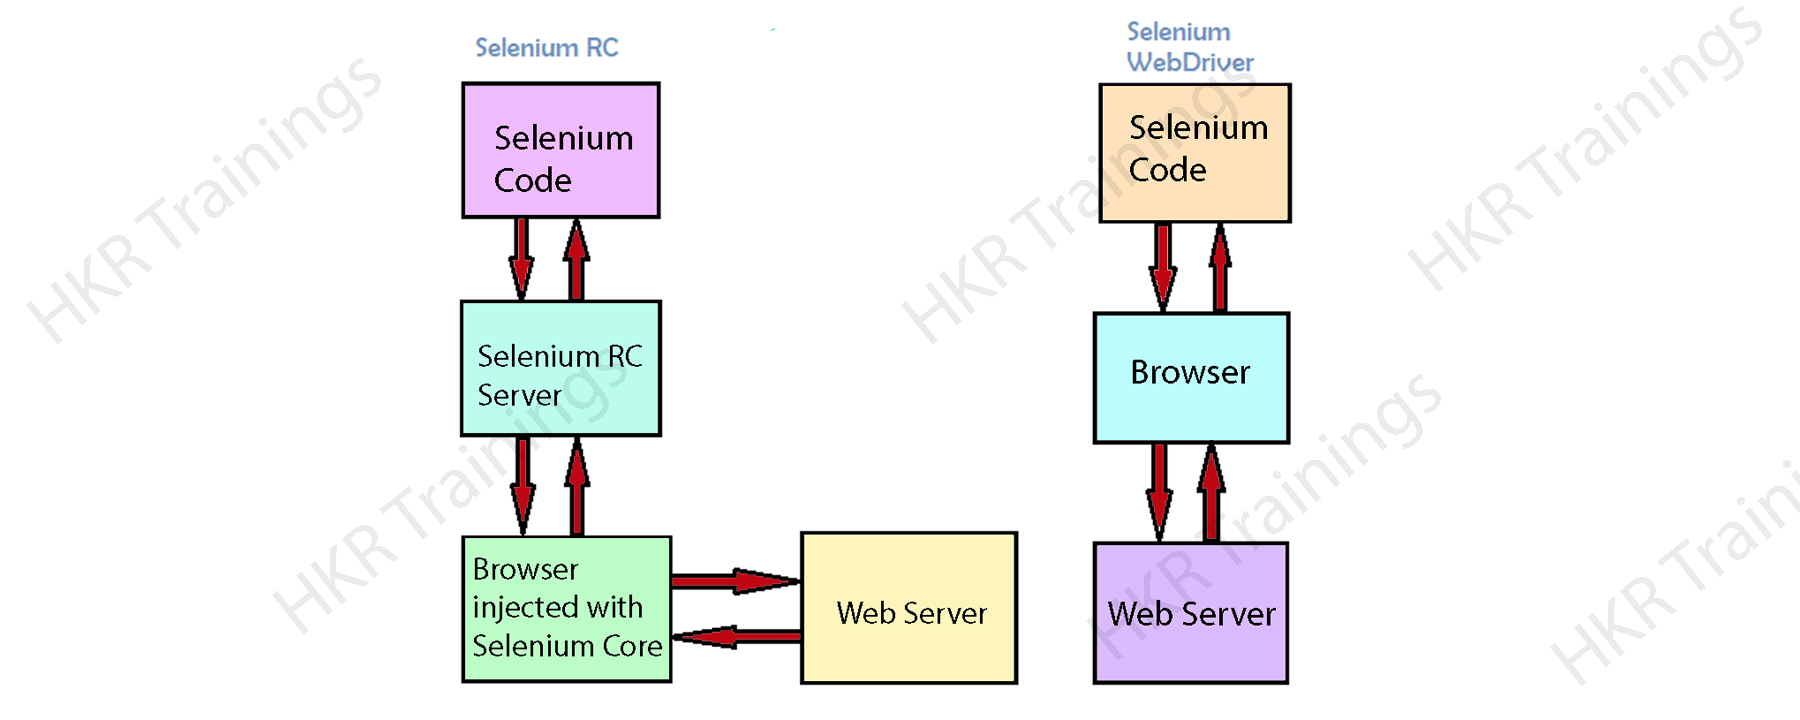 Selenium WebDriver